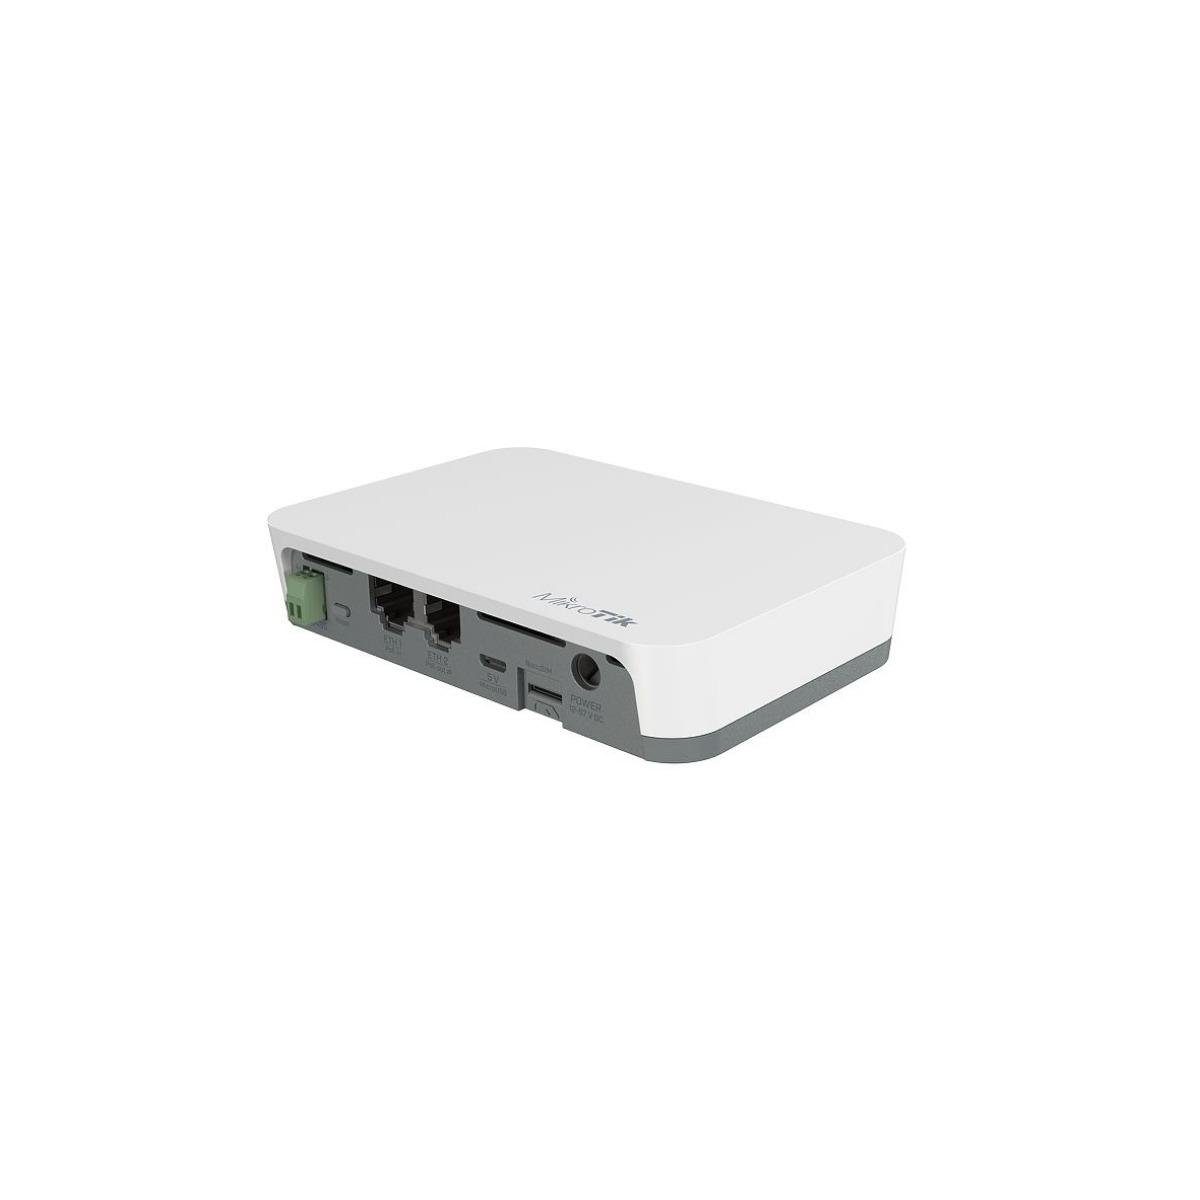 MikroTik RB924I-2ND-BT5&BG77 IoT - Gateway - GPS-Tracker vielseitige... für KNOT